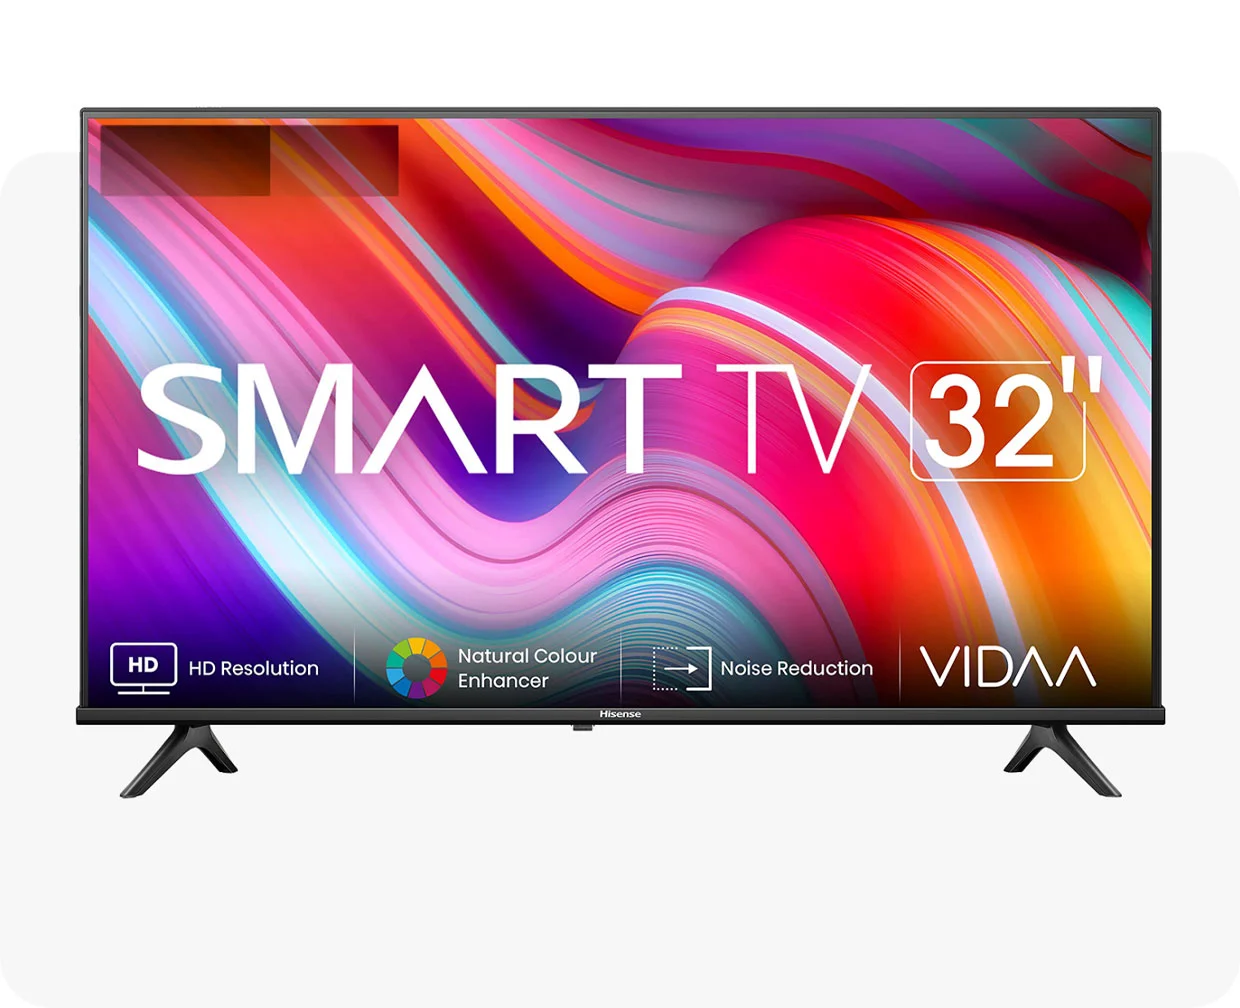 Pantalla Sansui 40 Pulgadas Smart TV FHD SMX40T1FN